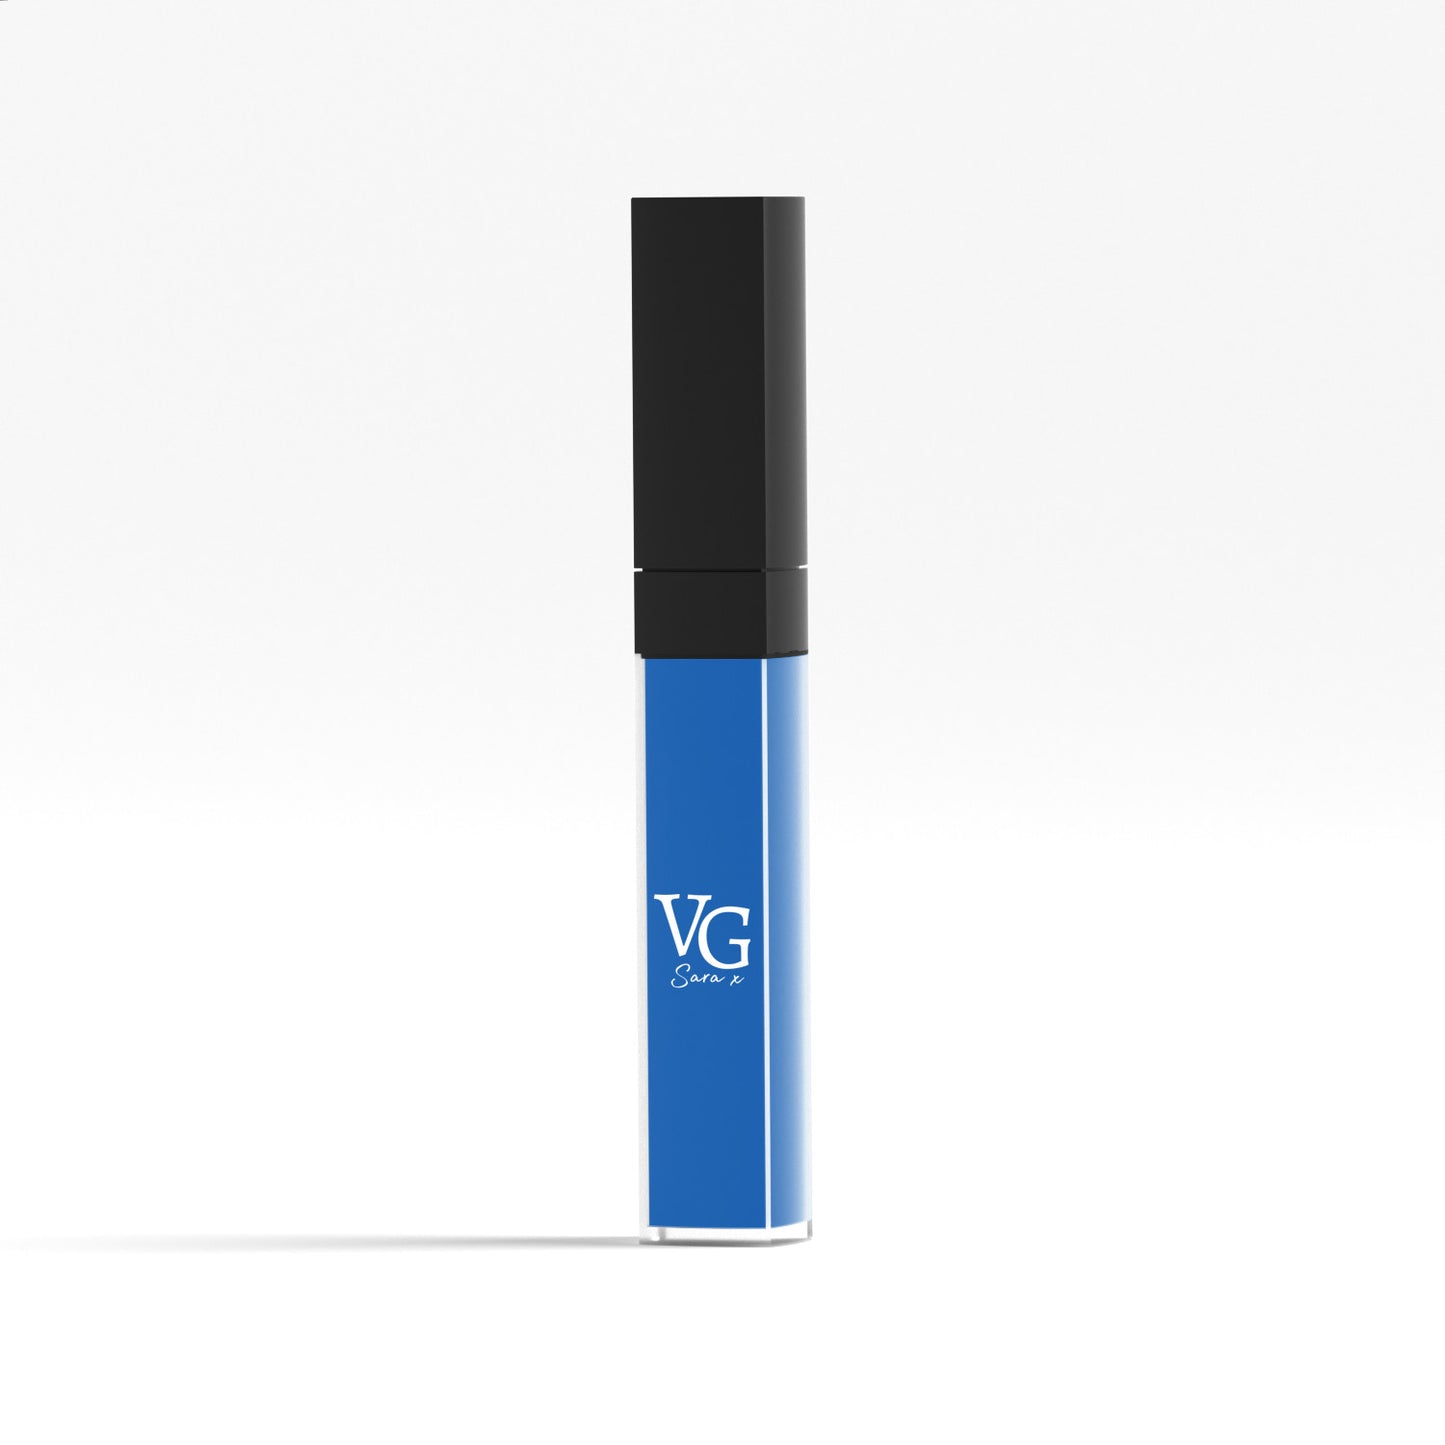 VG vegan liquid lipstick with a vibrant blue color